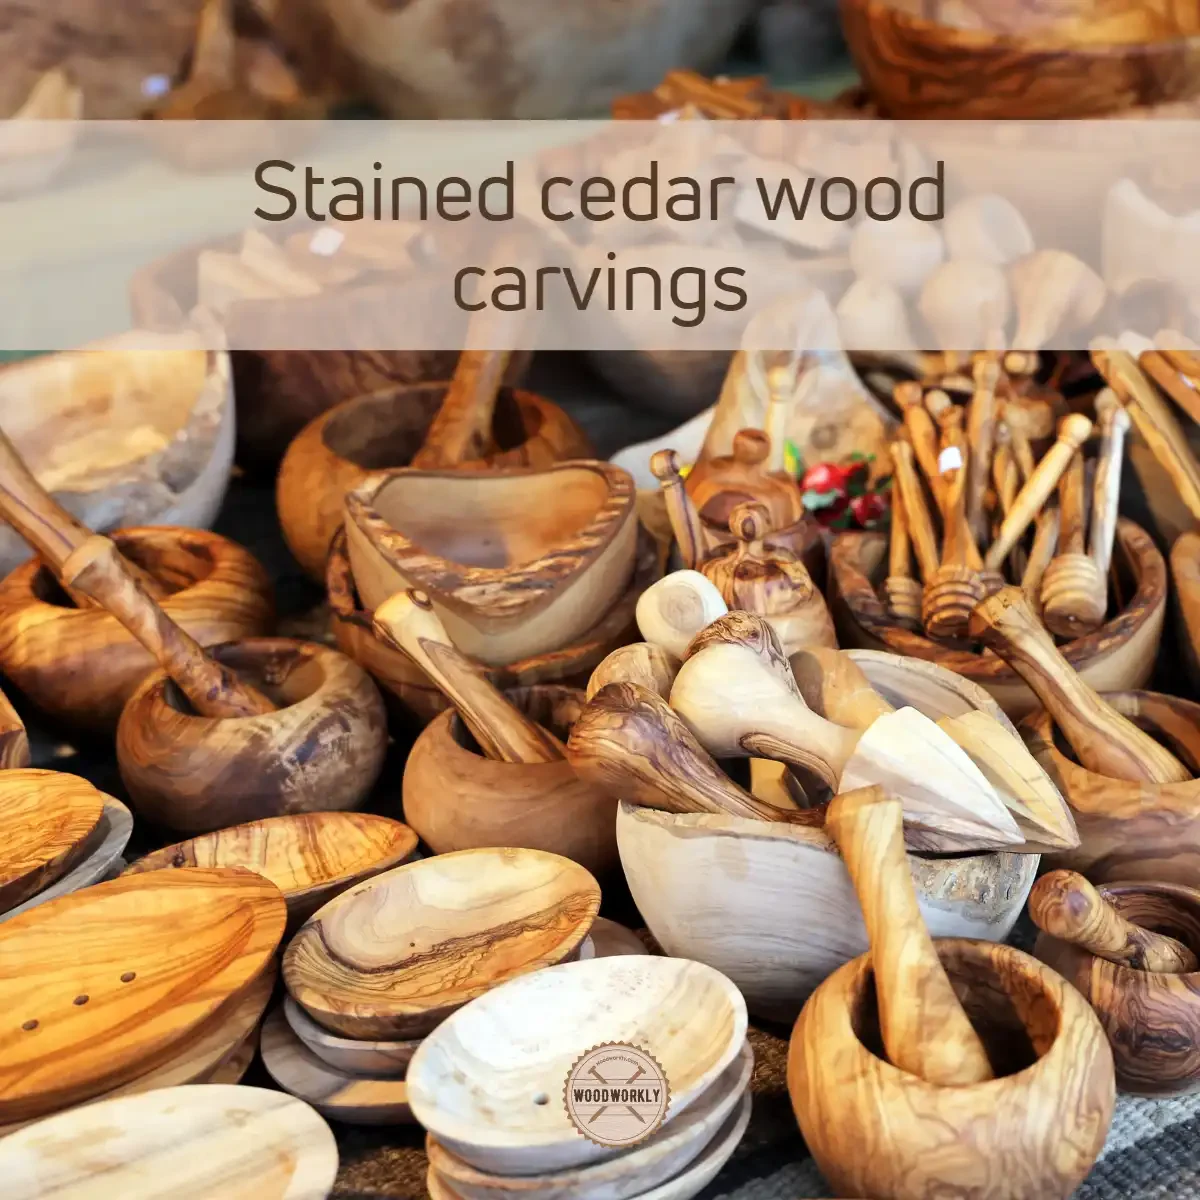 Stained cedar wood carvings